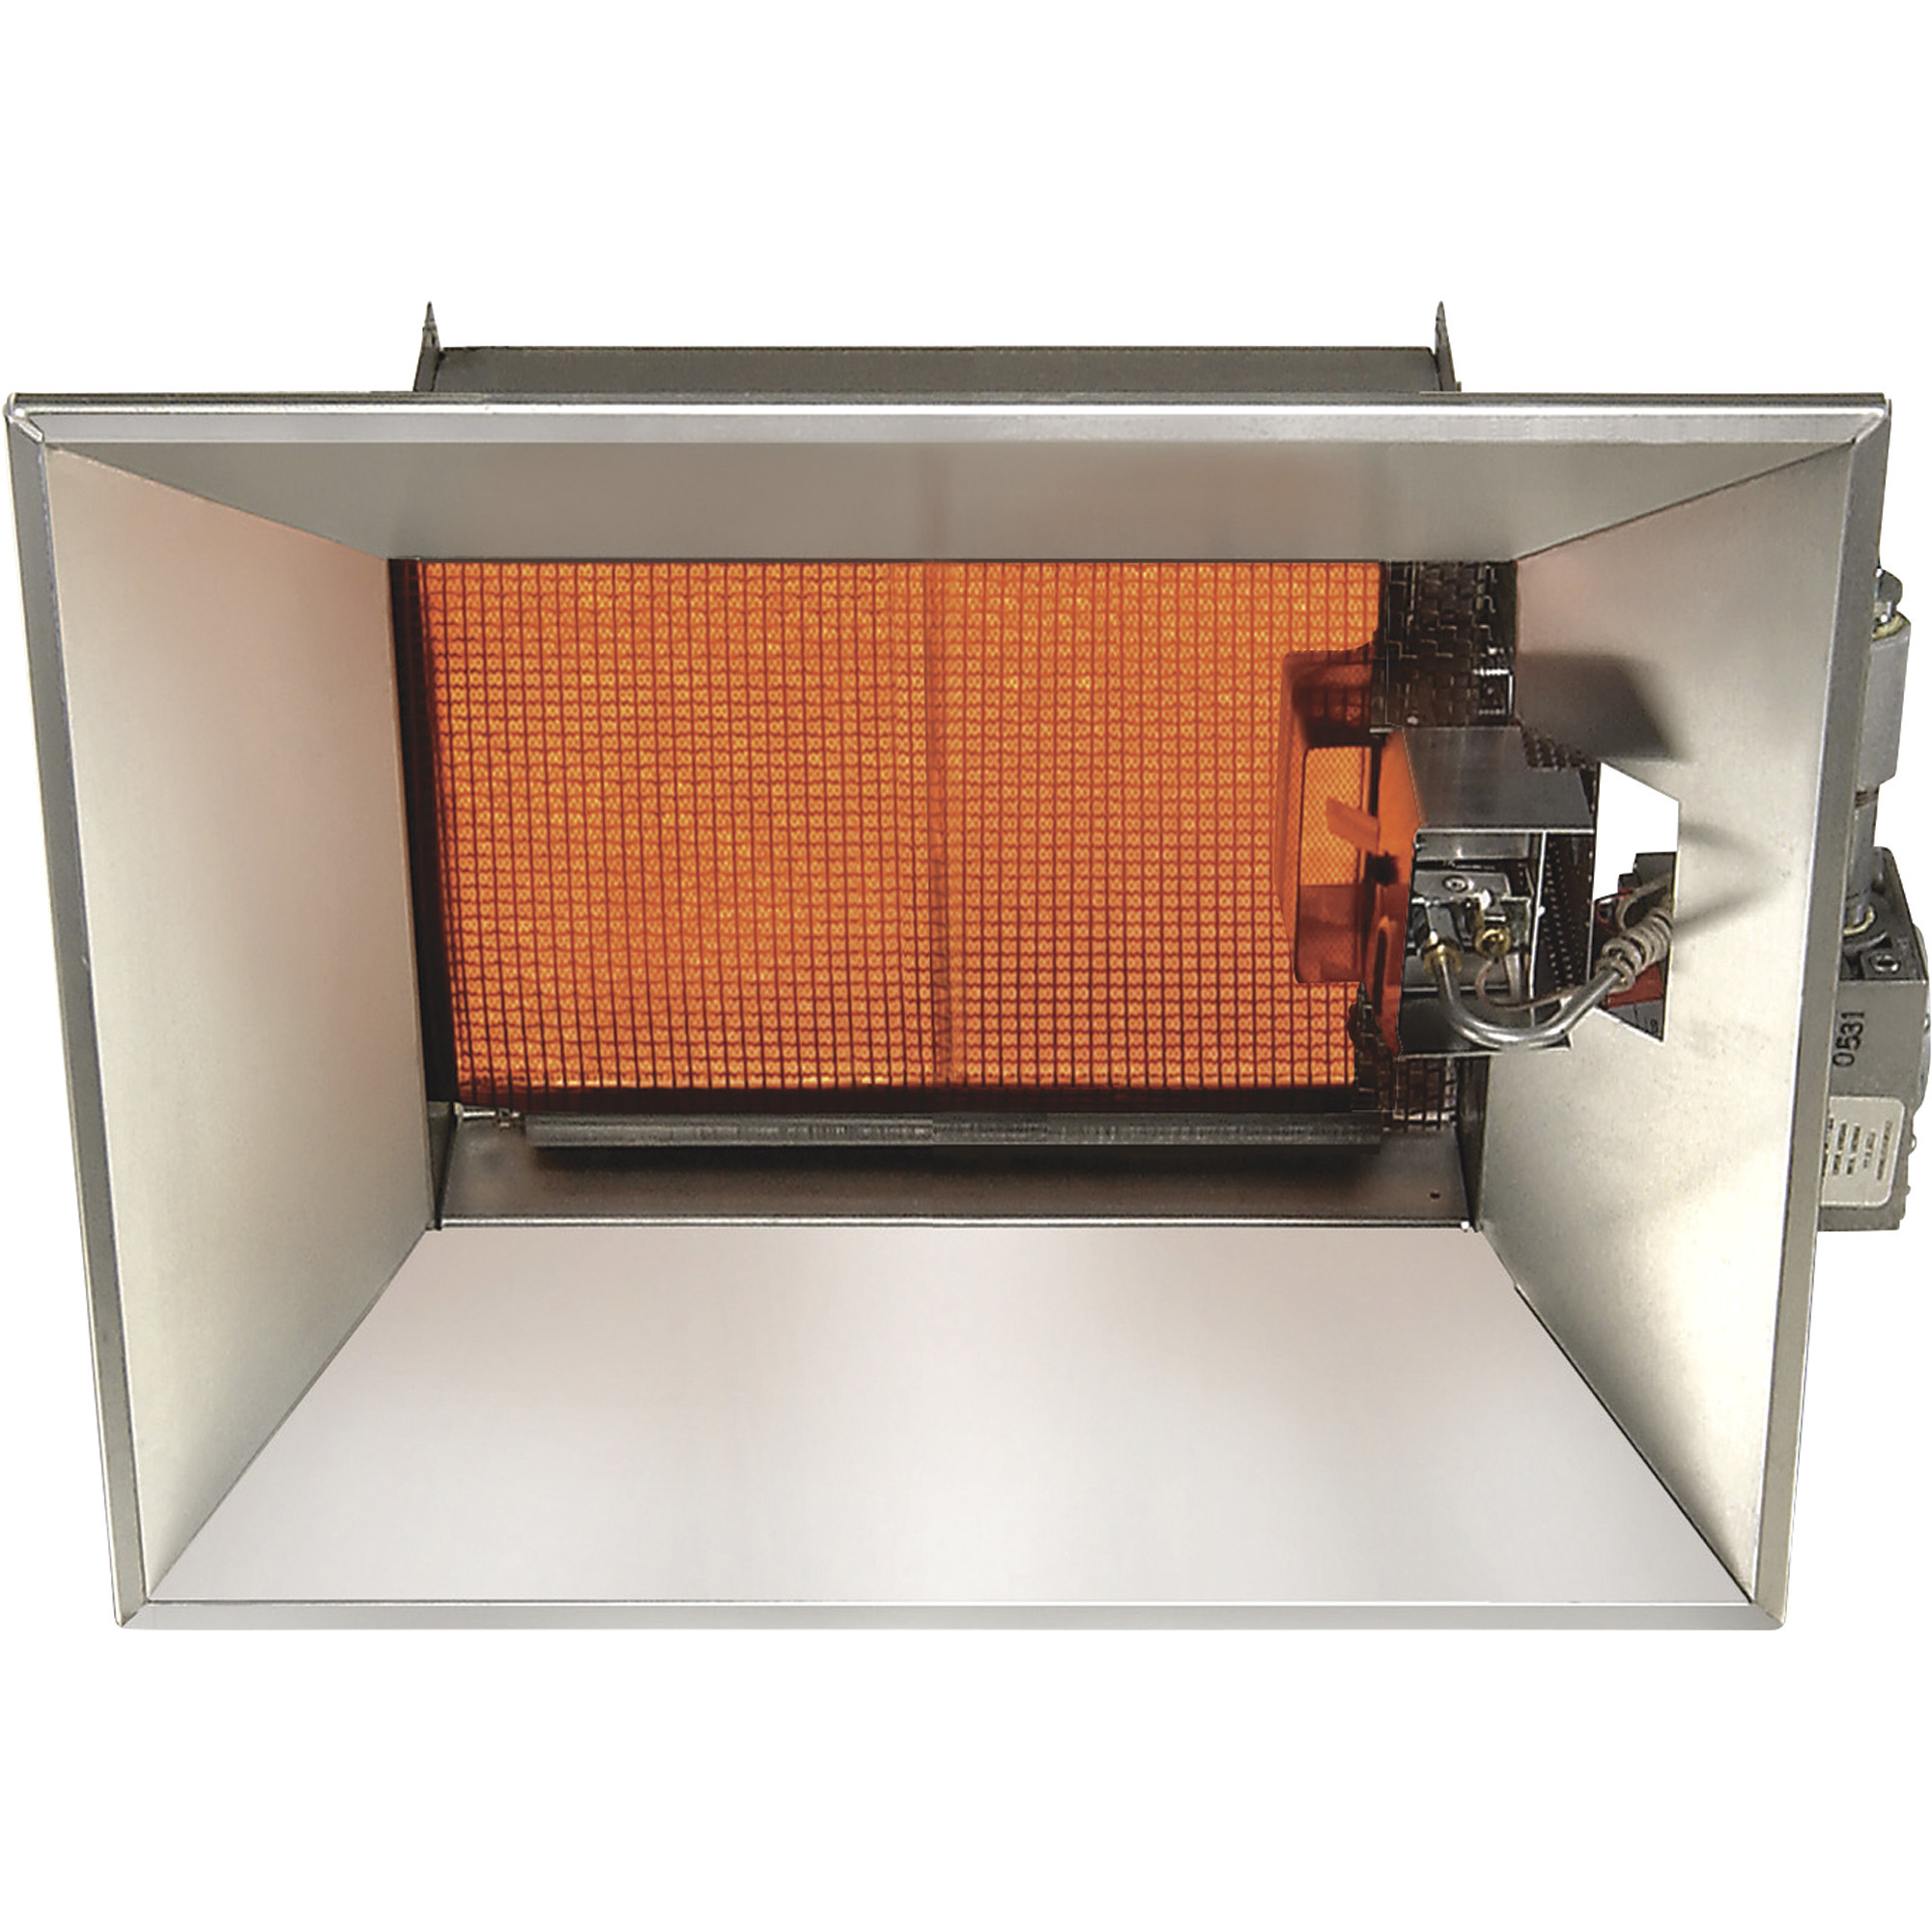 SunStar Heating Products Infrared Ceramic Heater, Natural Gas, 26,000 BTU, Model SGM3-N1